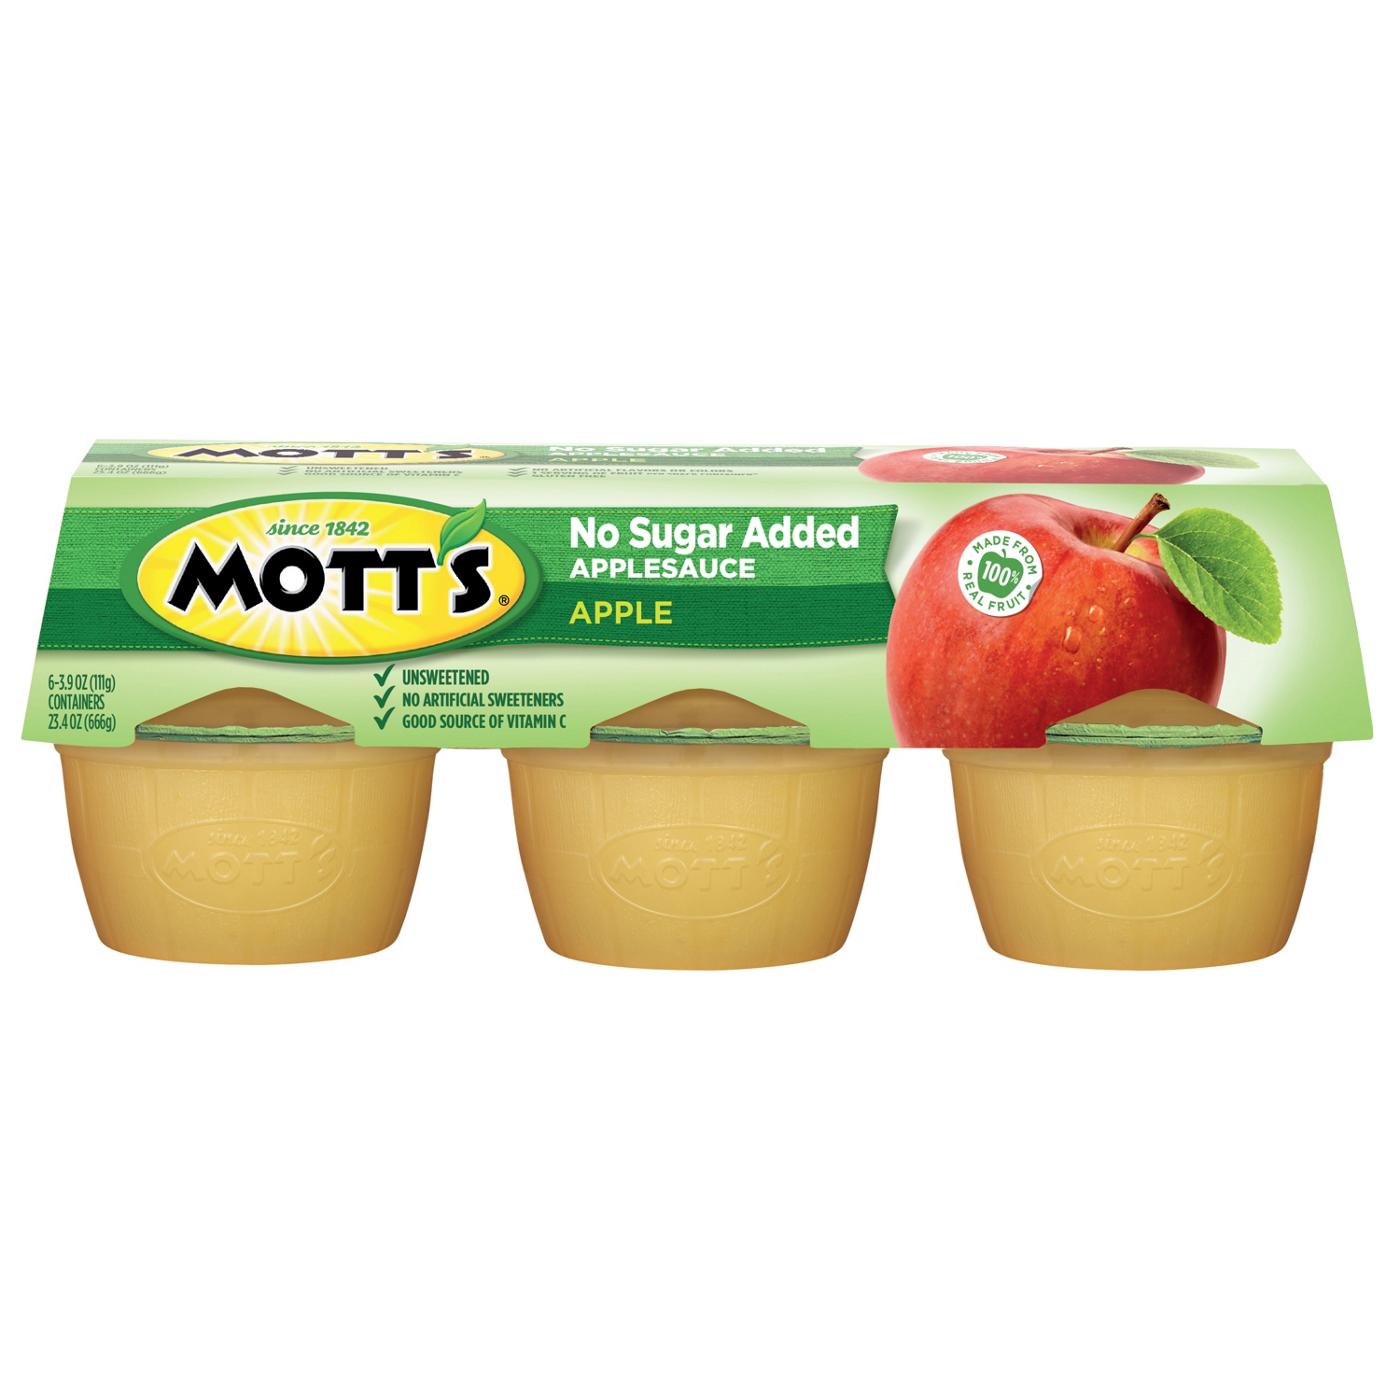 Mott's No Sugar Added Apple Sauce; image 1 of 7